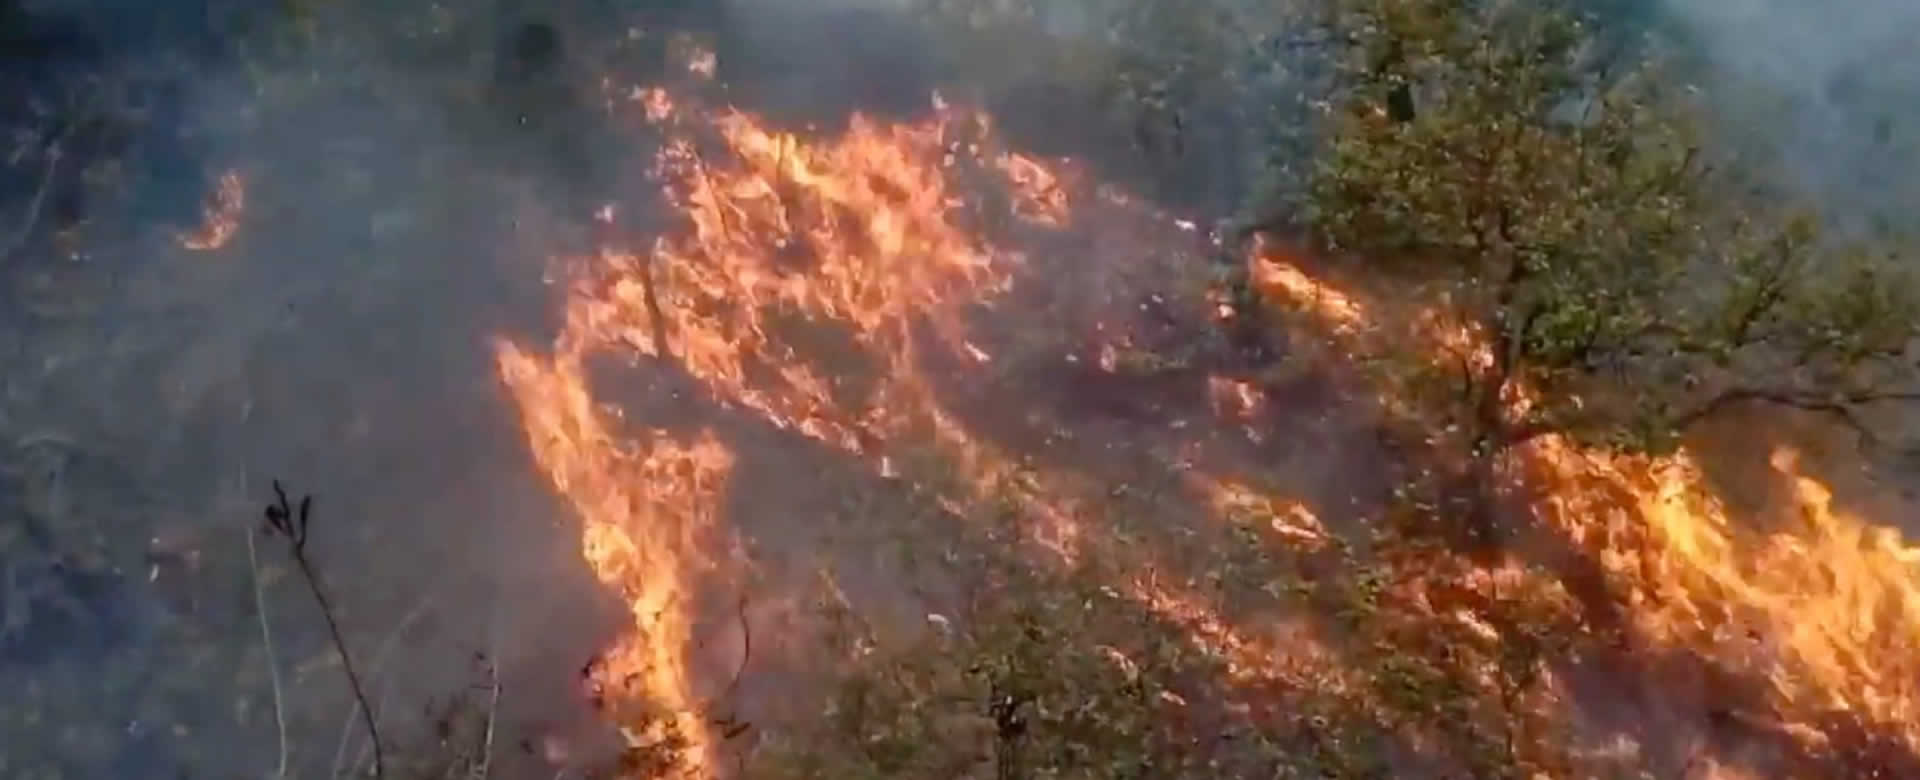 Incendio arrasa con bosques de Dipilto